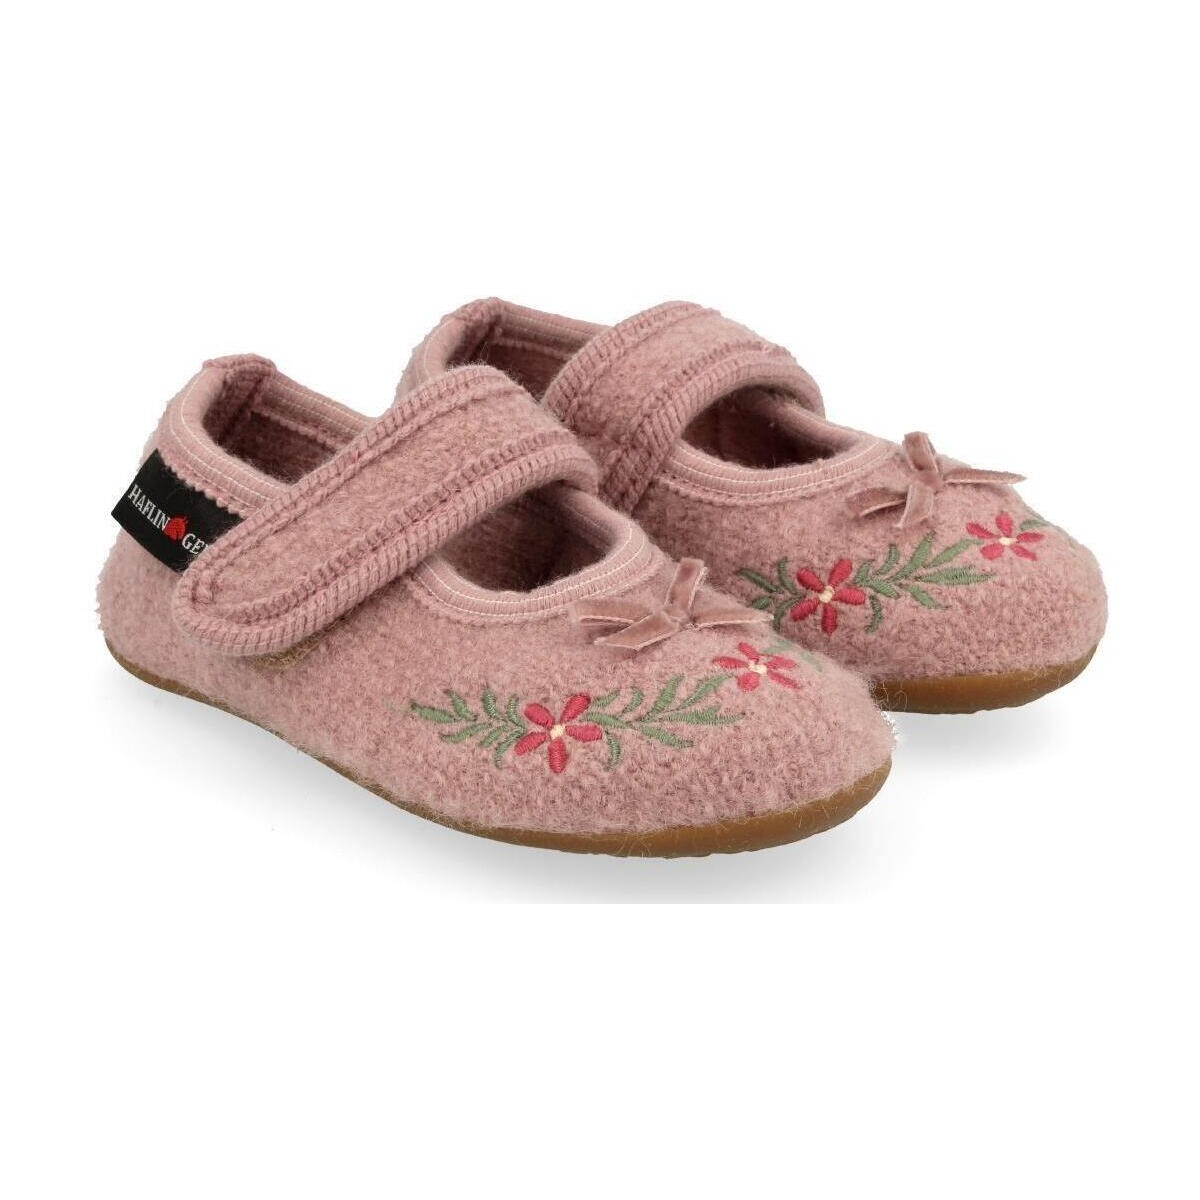 Chaussures Enfant Chaussons Haflinger 48501383 Rose